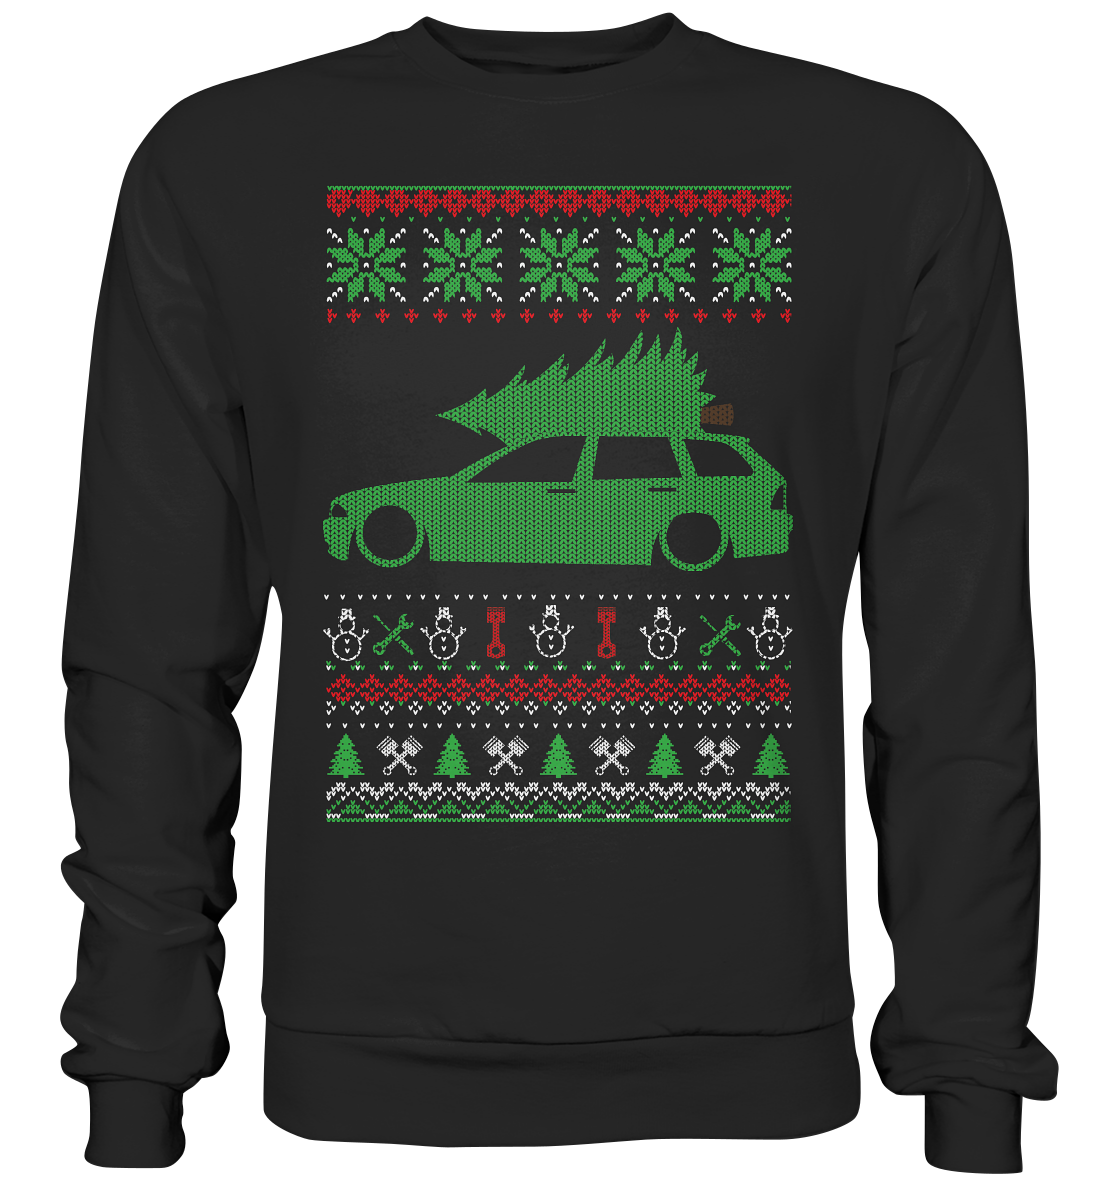 CODUGLY_BGKE46T - Premium Sweatshirt